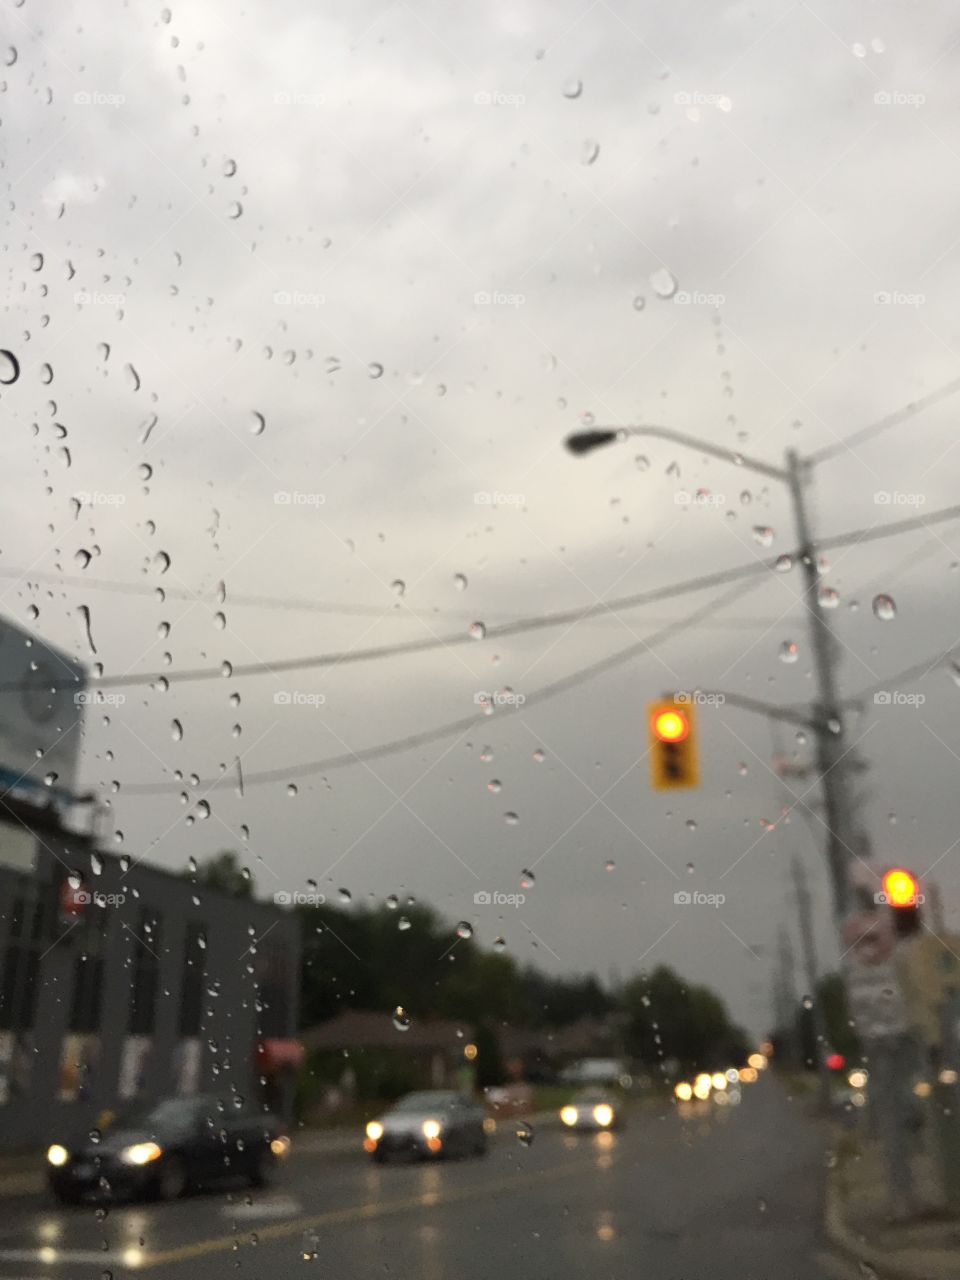 Raining in Toronto 